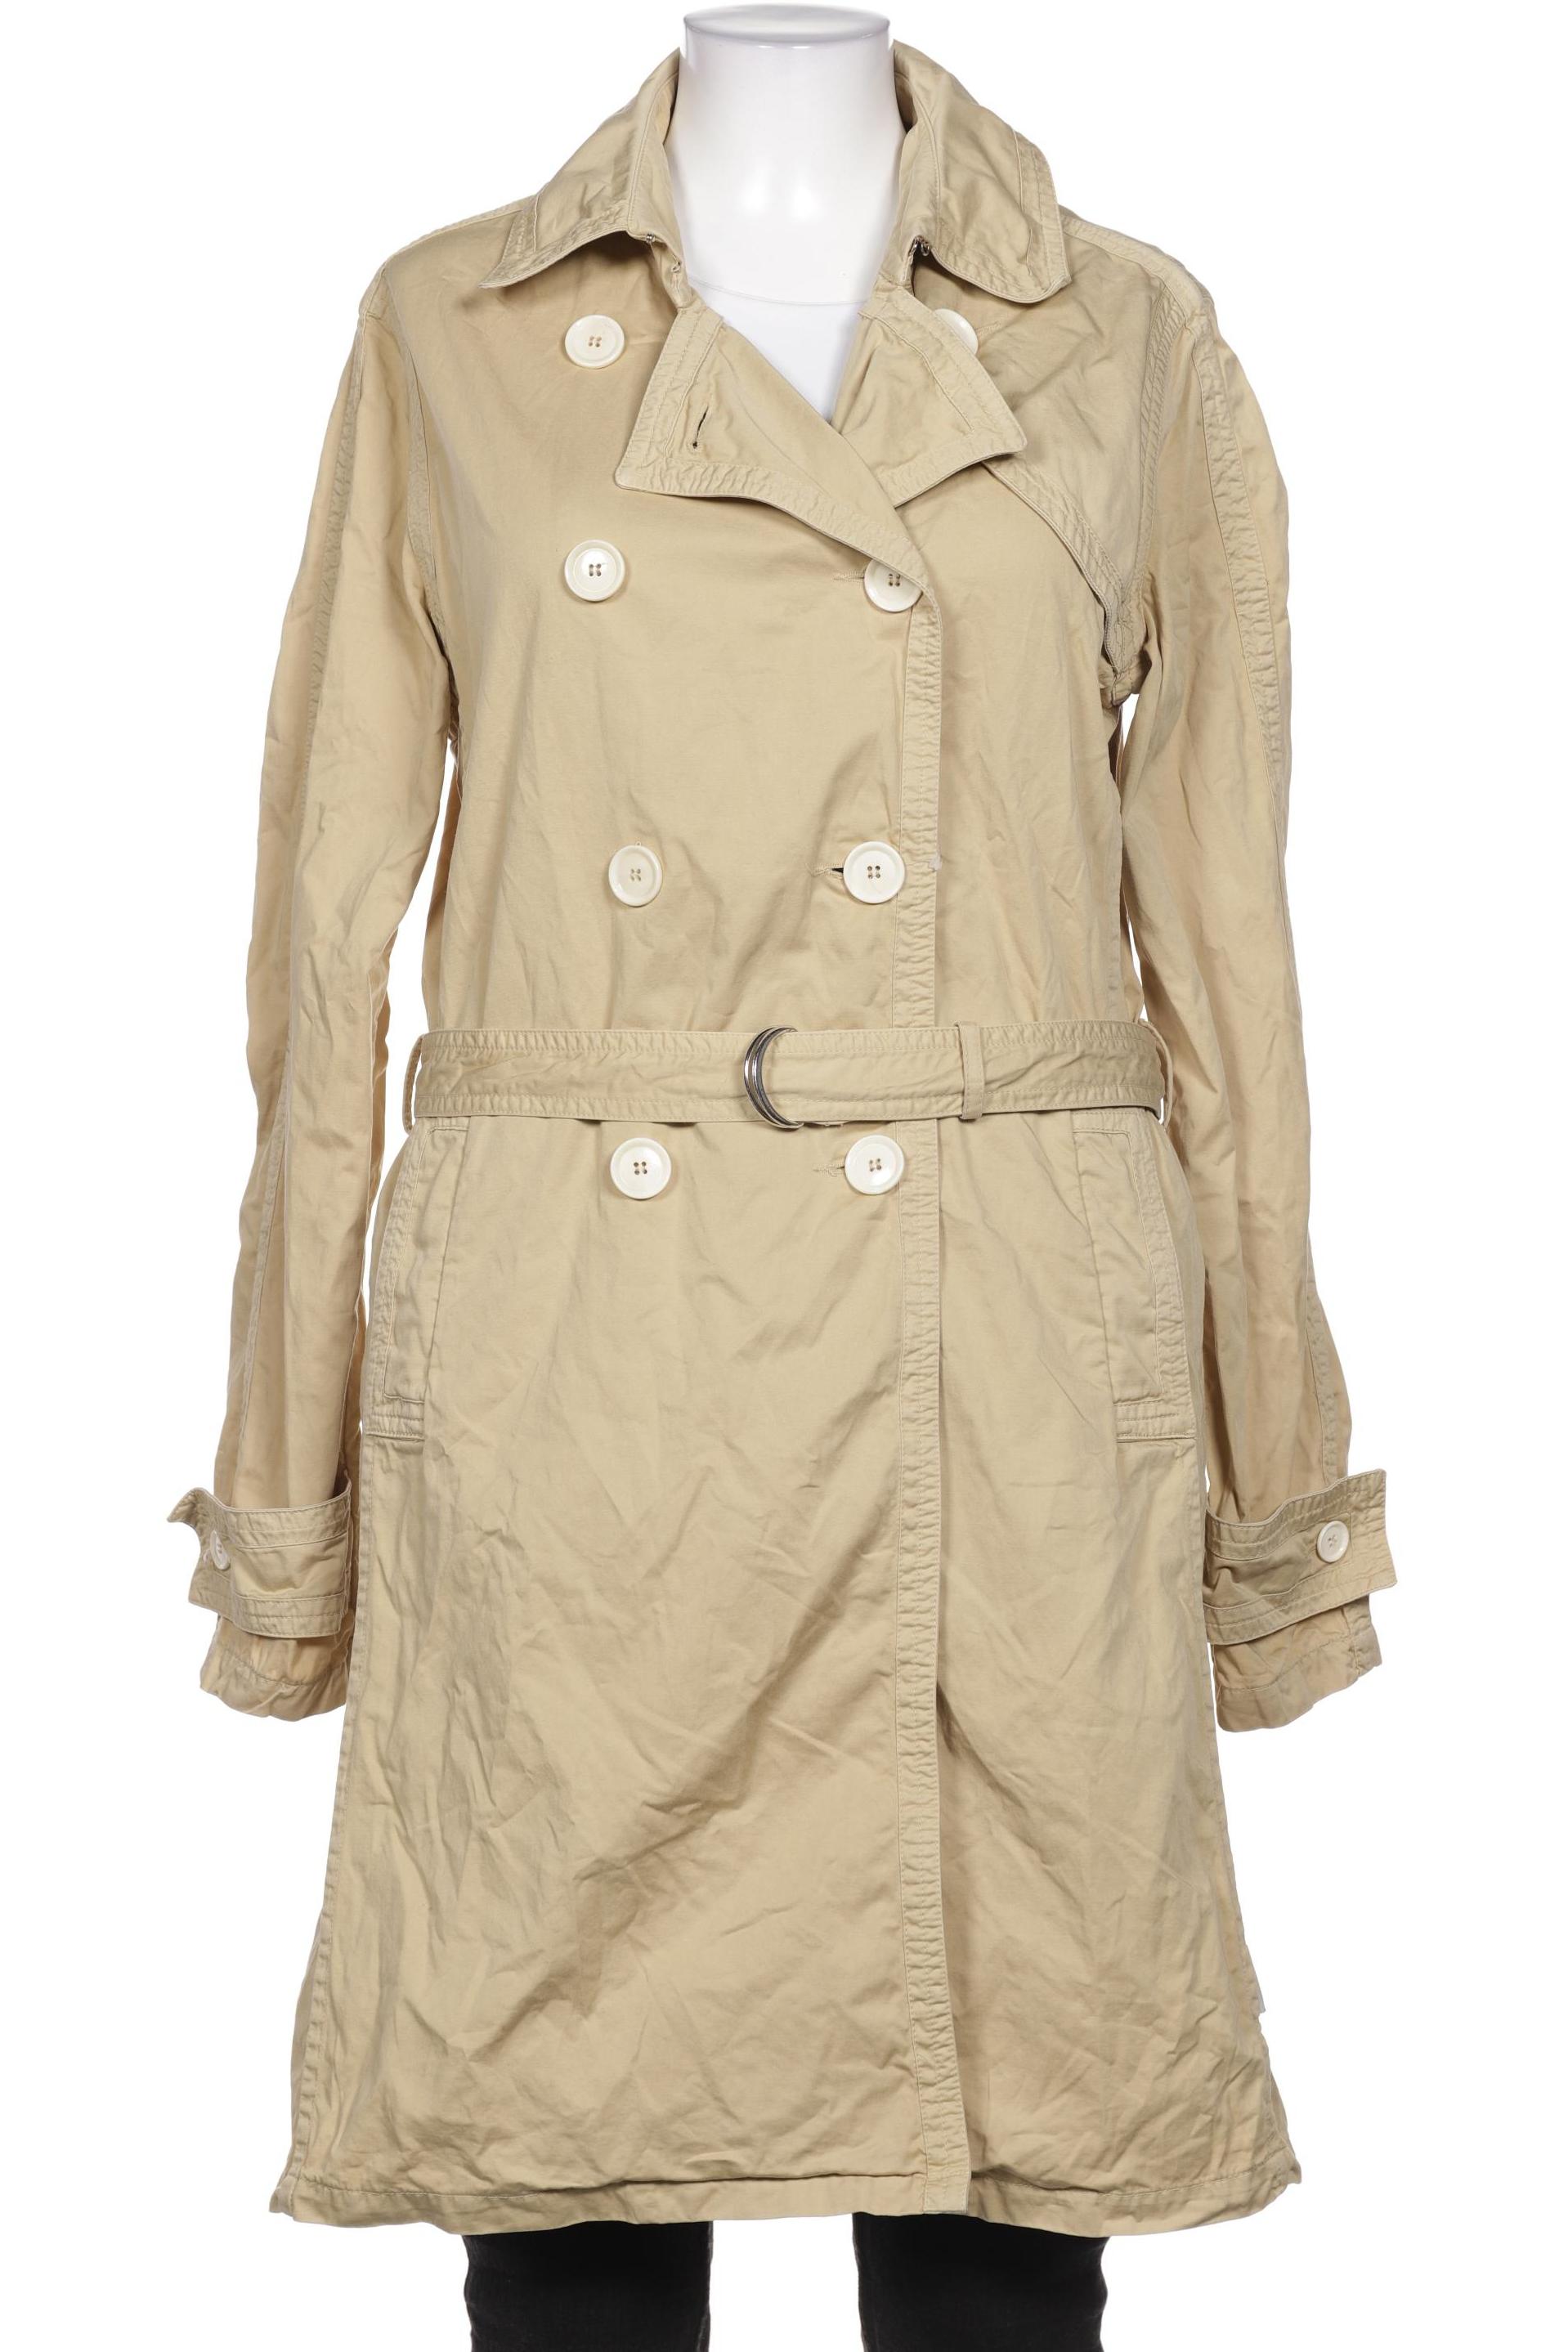 Moncler Damen Mantel, beige, Gr. 46 von Moncler